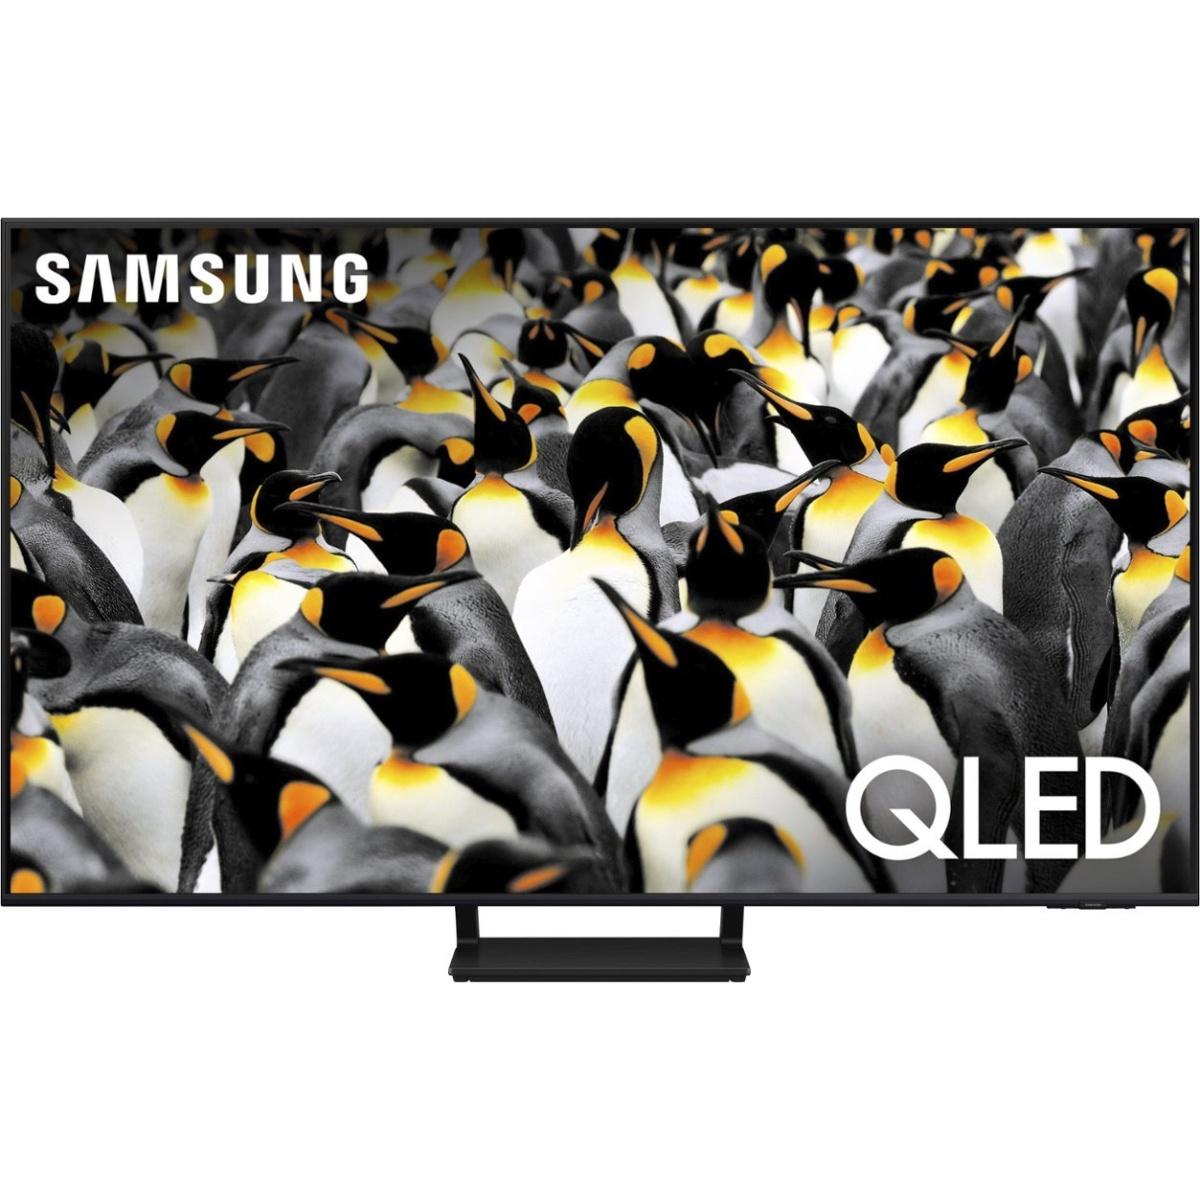 SAMSUNG QLED TV 65 INCH Q70, QLED. Flat, smart, WIFI, built